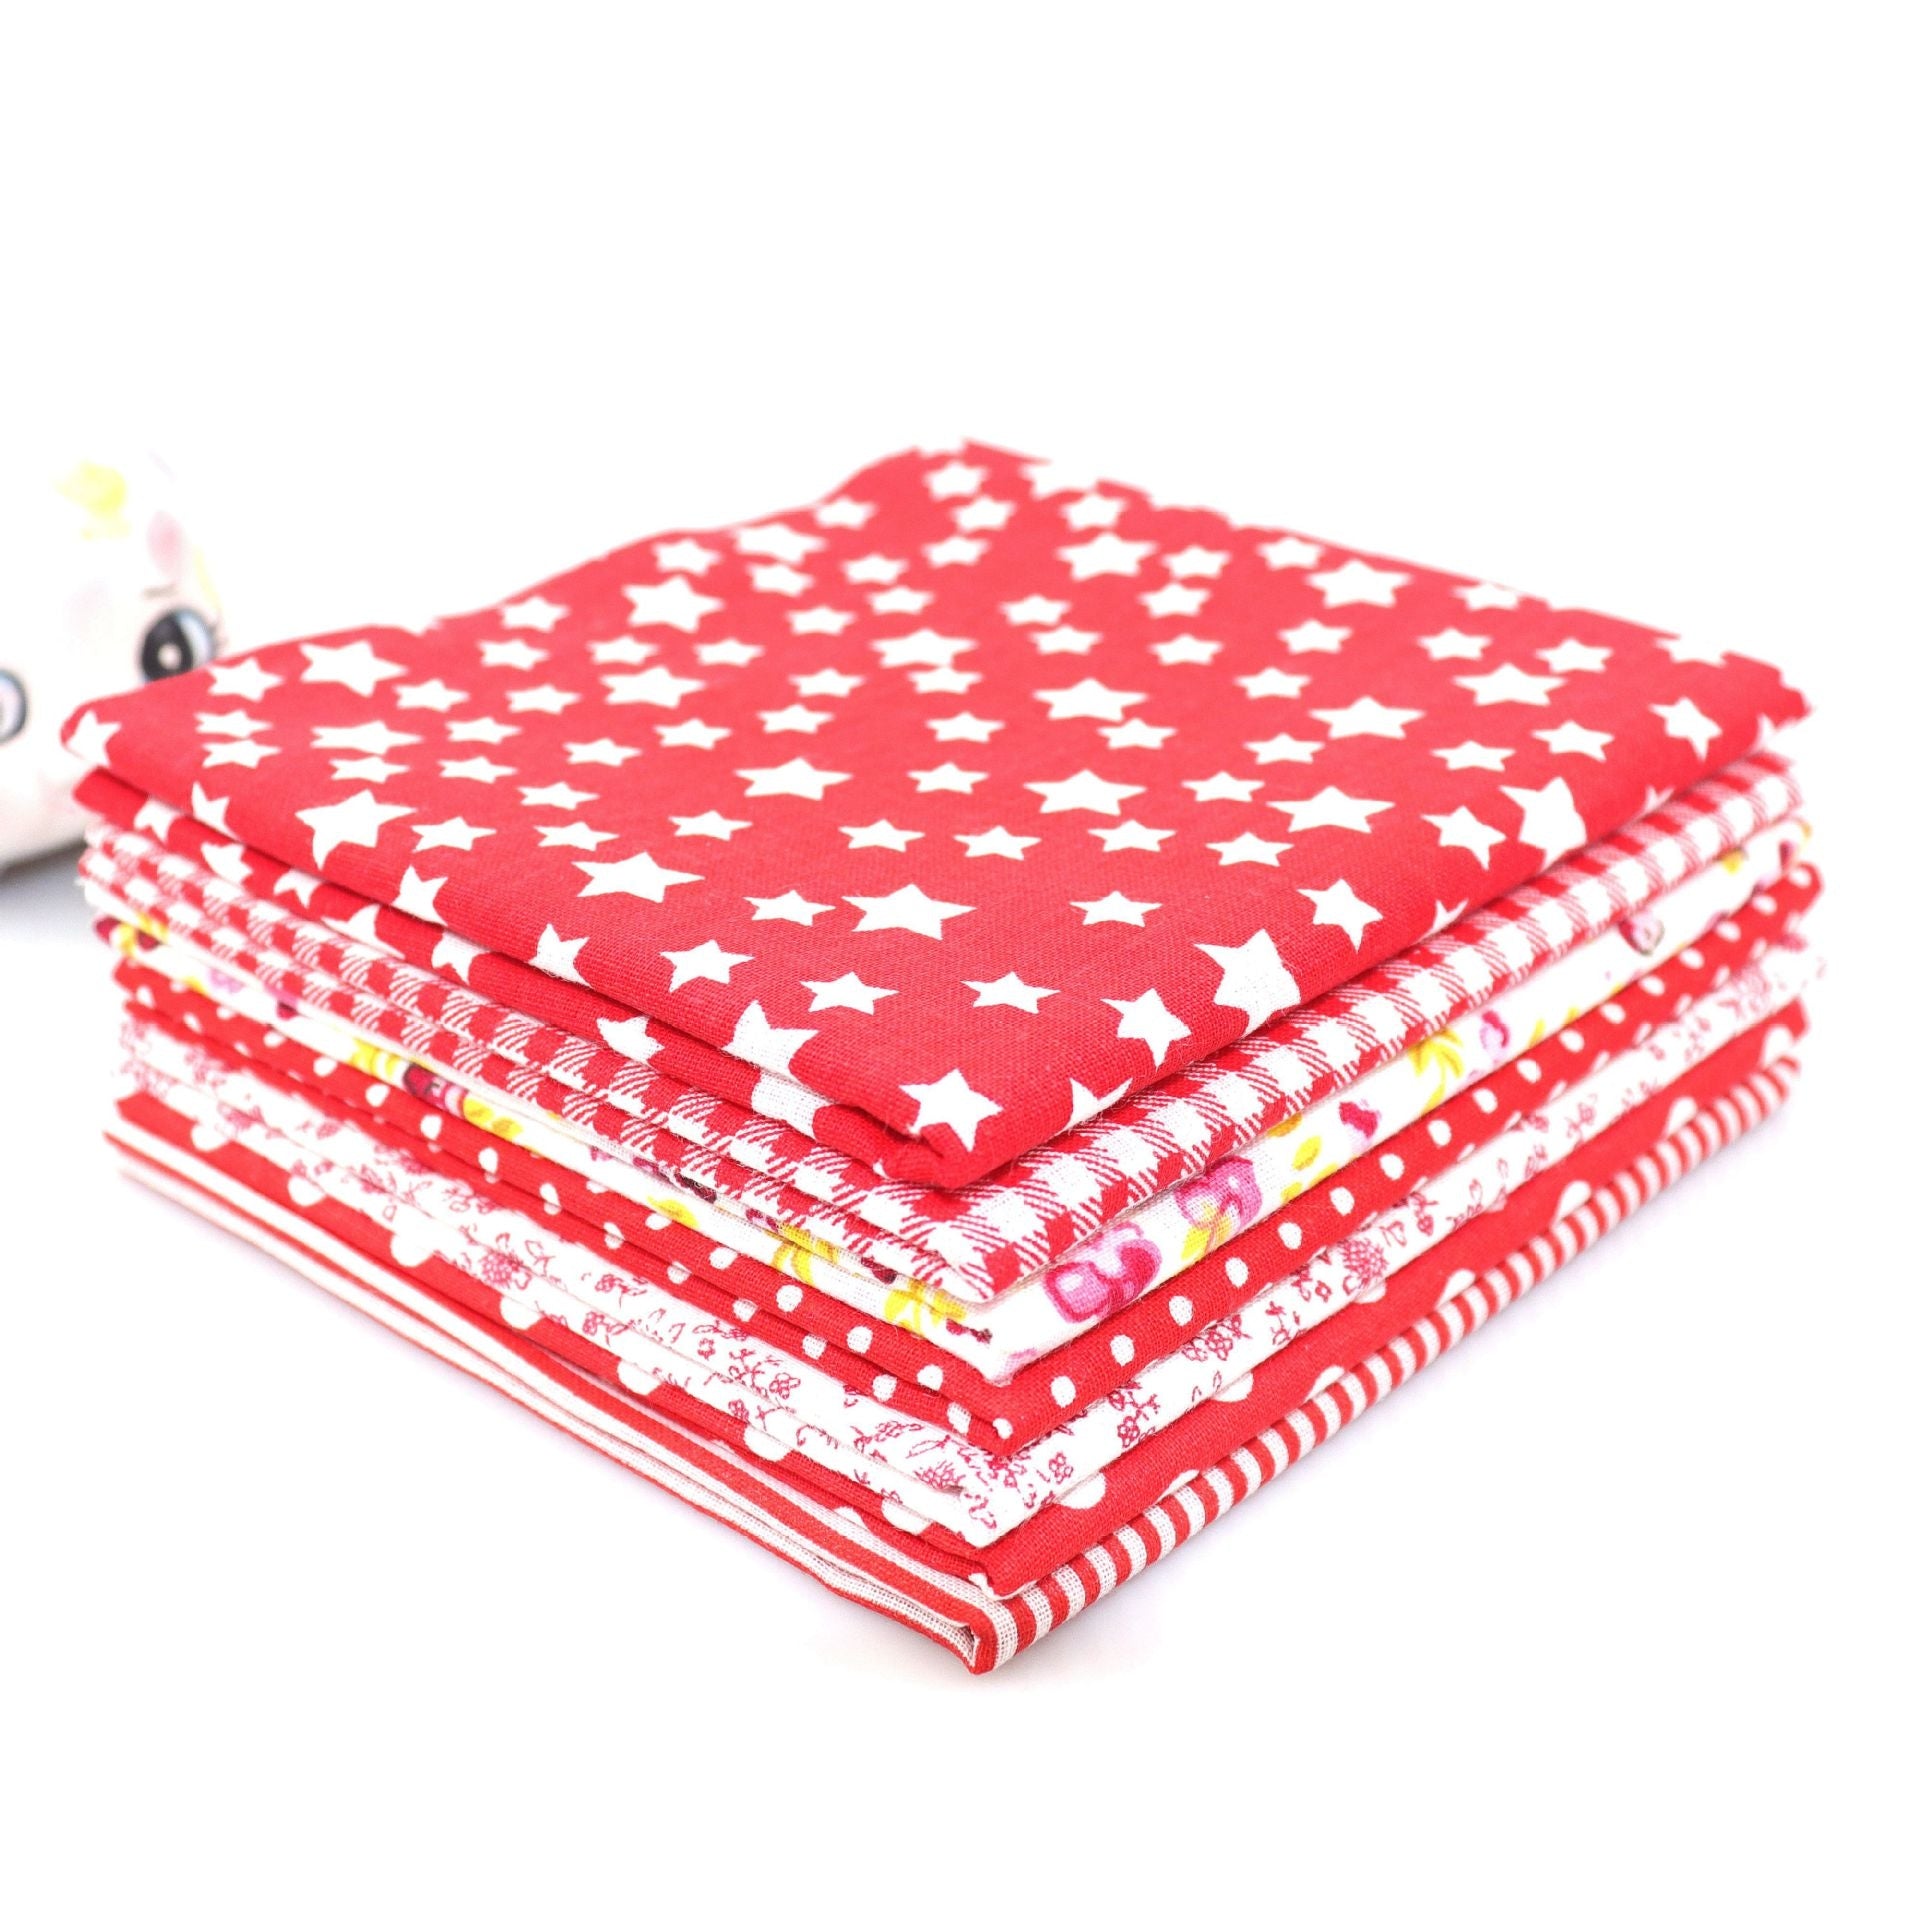 MajorCrafts 7pcs of 50cm x 50cm Mixed Red Theme Cotton Fabric Patchwork Squares